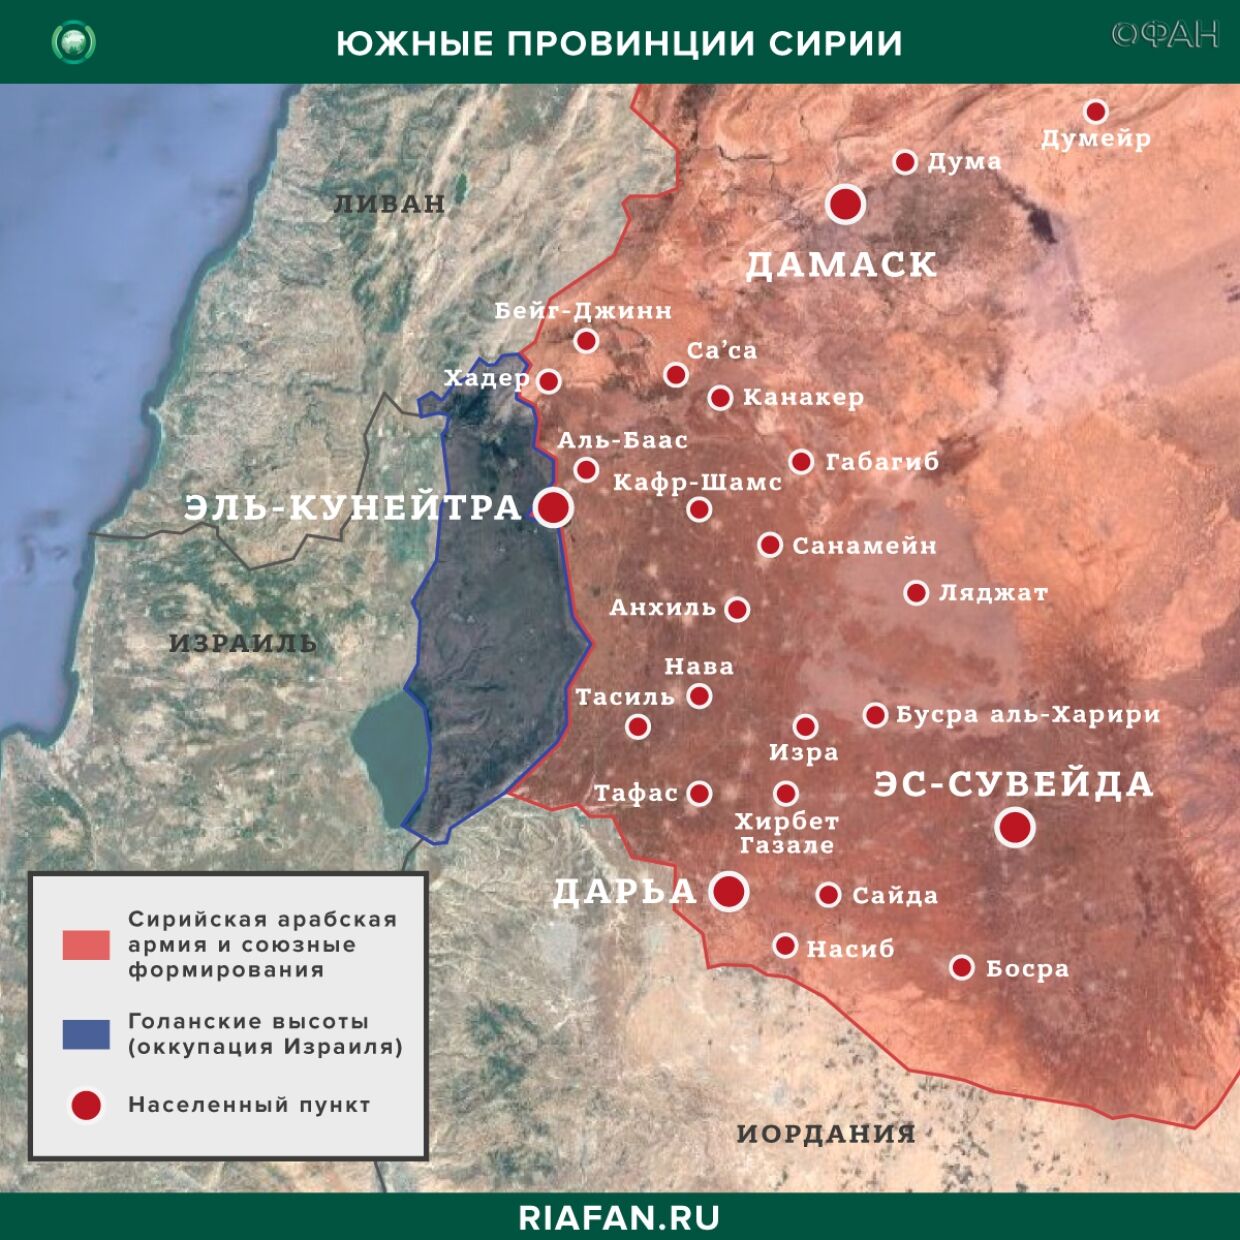 叙利亚每日结果 17 四月 06.00: ИГ* совершило две вылазки в Даръа, взрыв в Хасаке убил пять боевиков